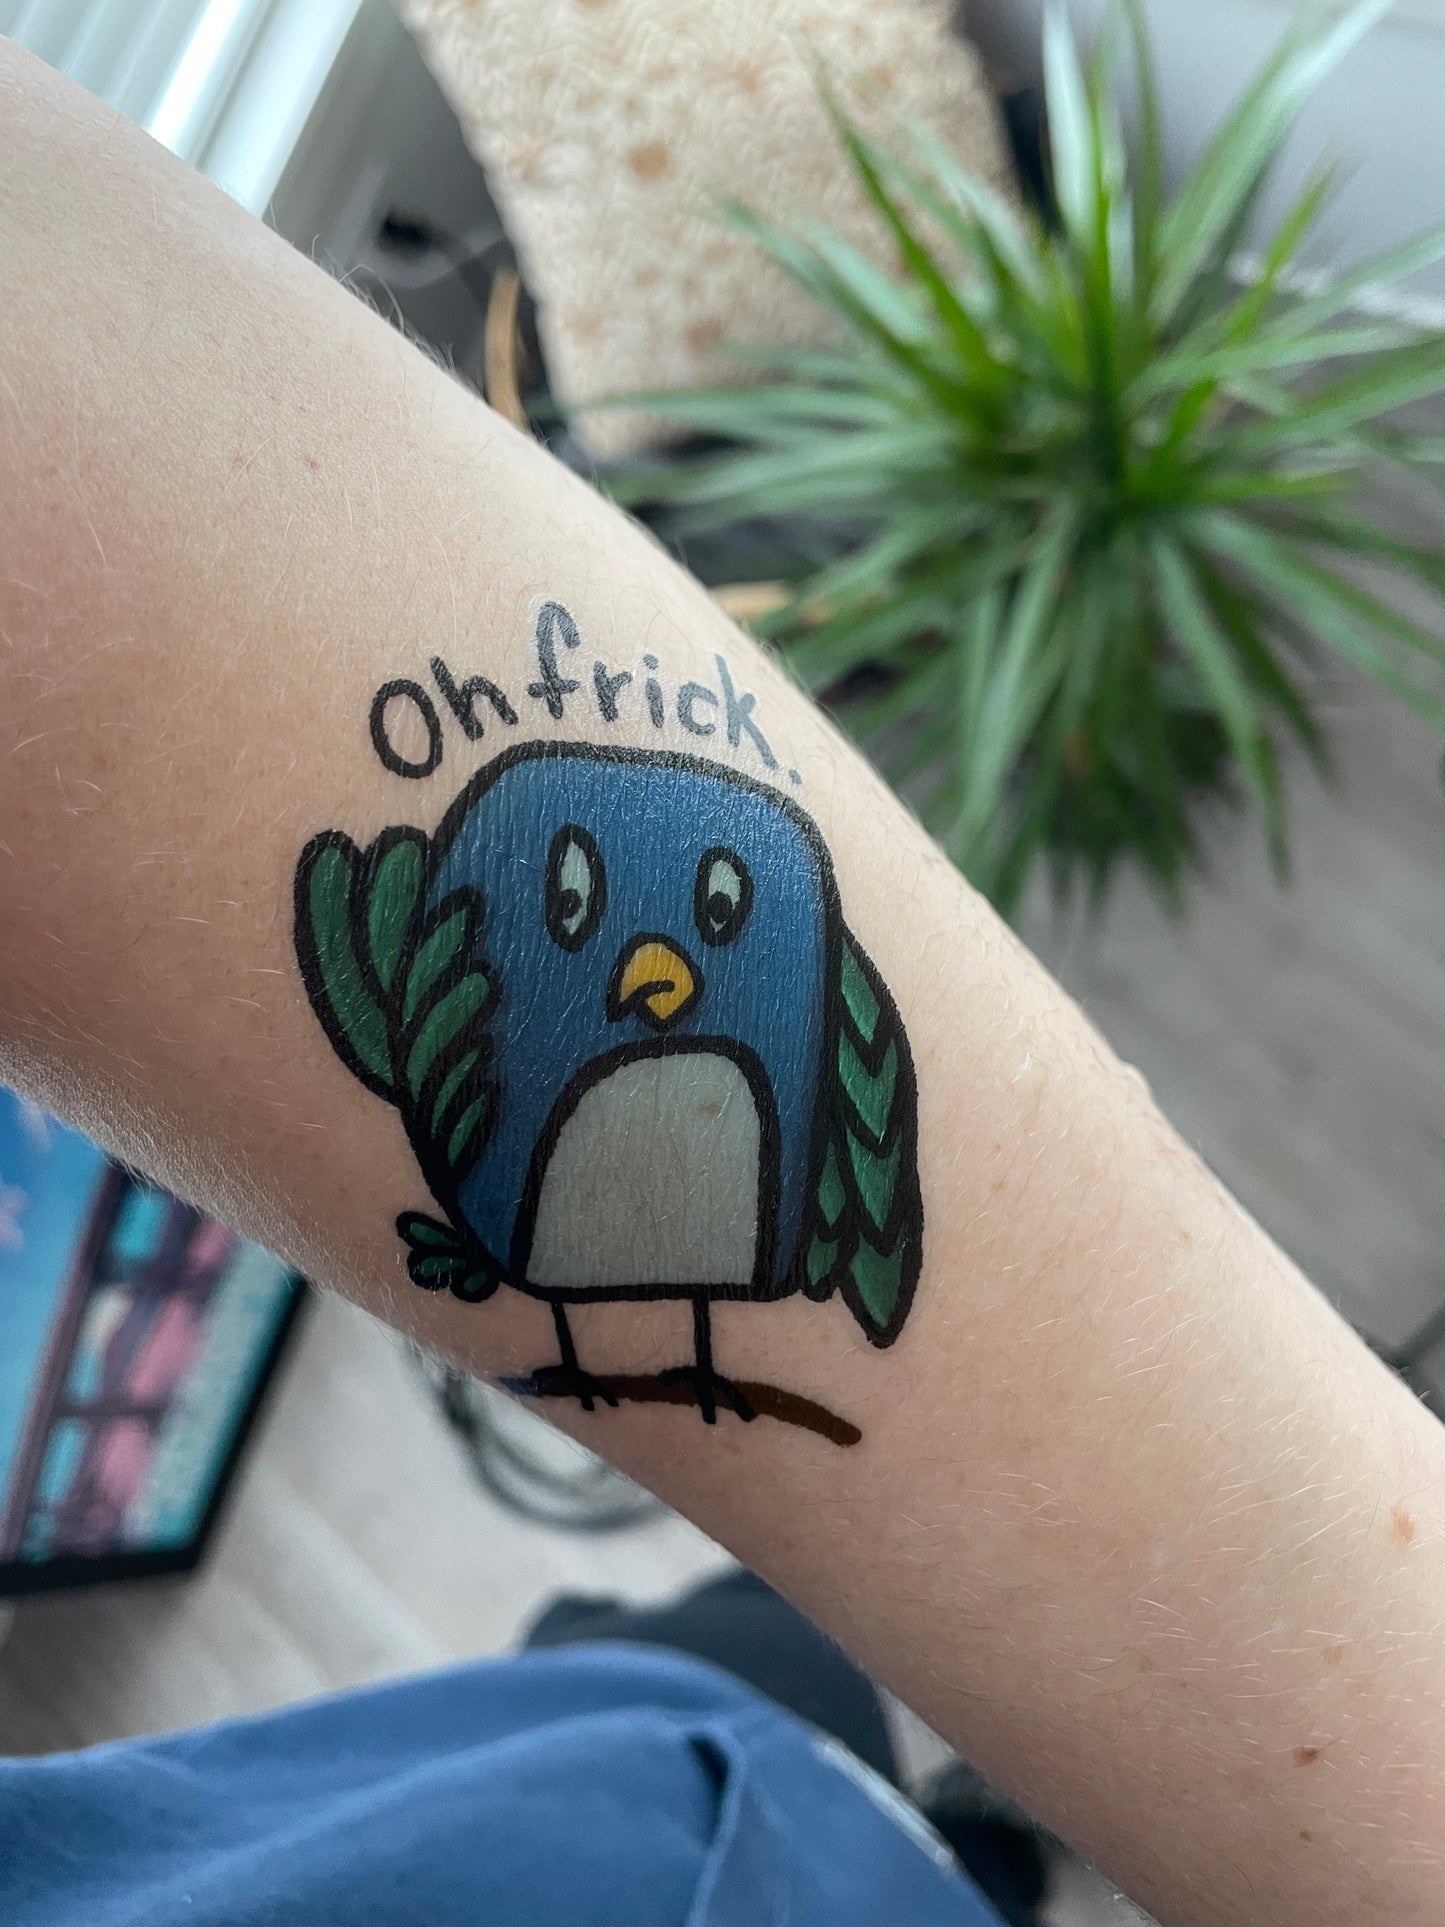 Oh frick Bird Temporary Tattoo!